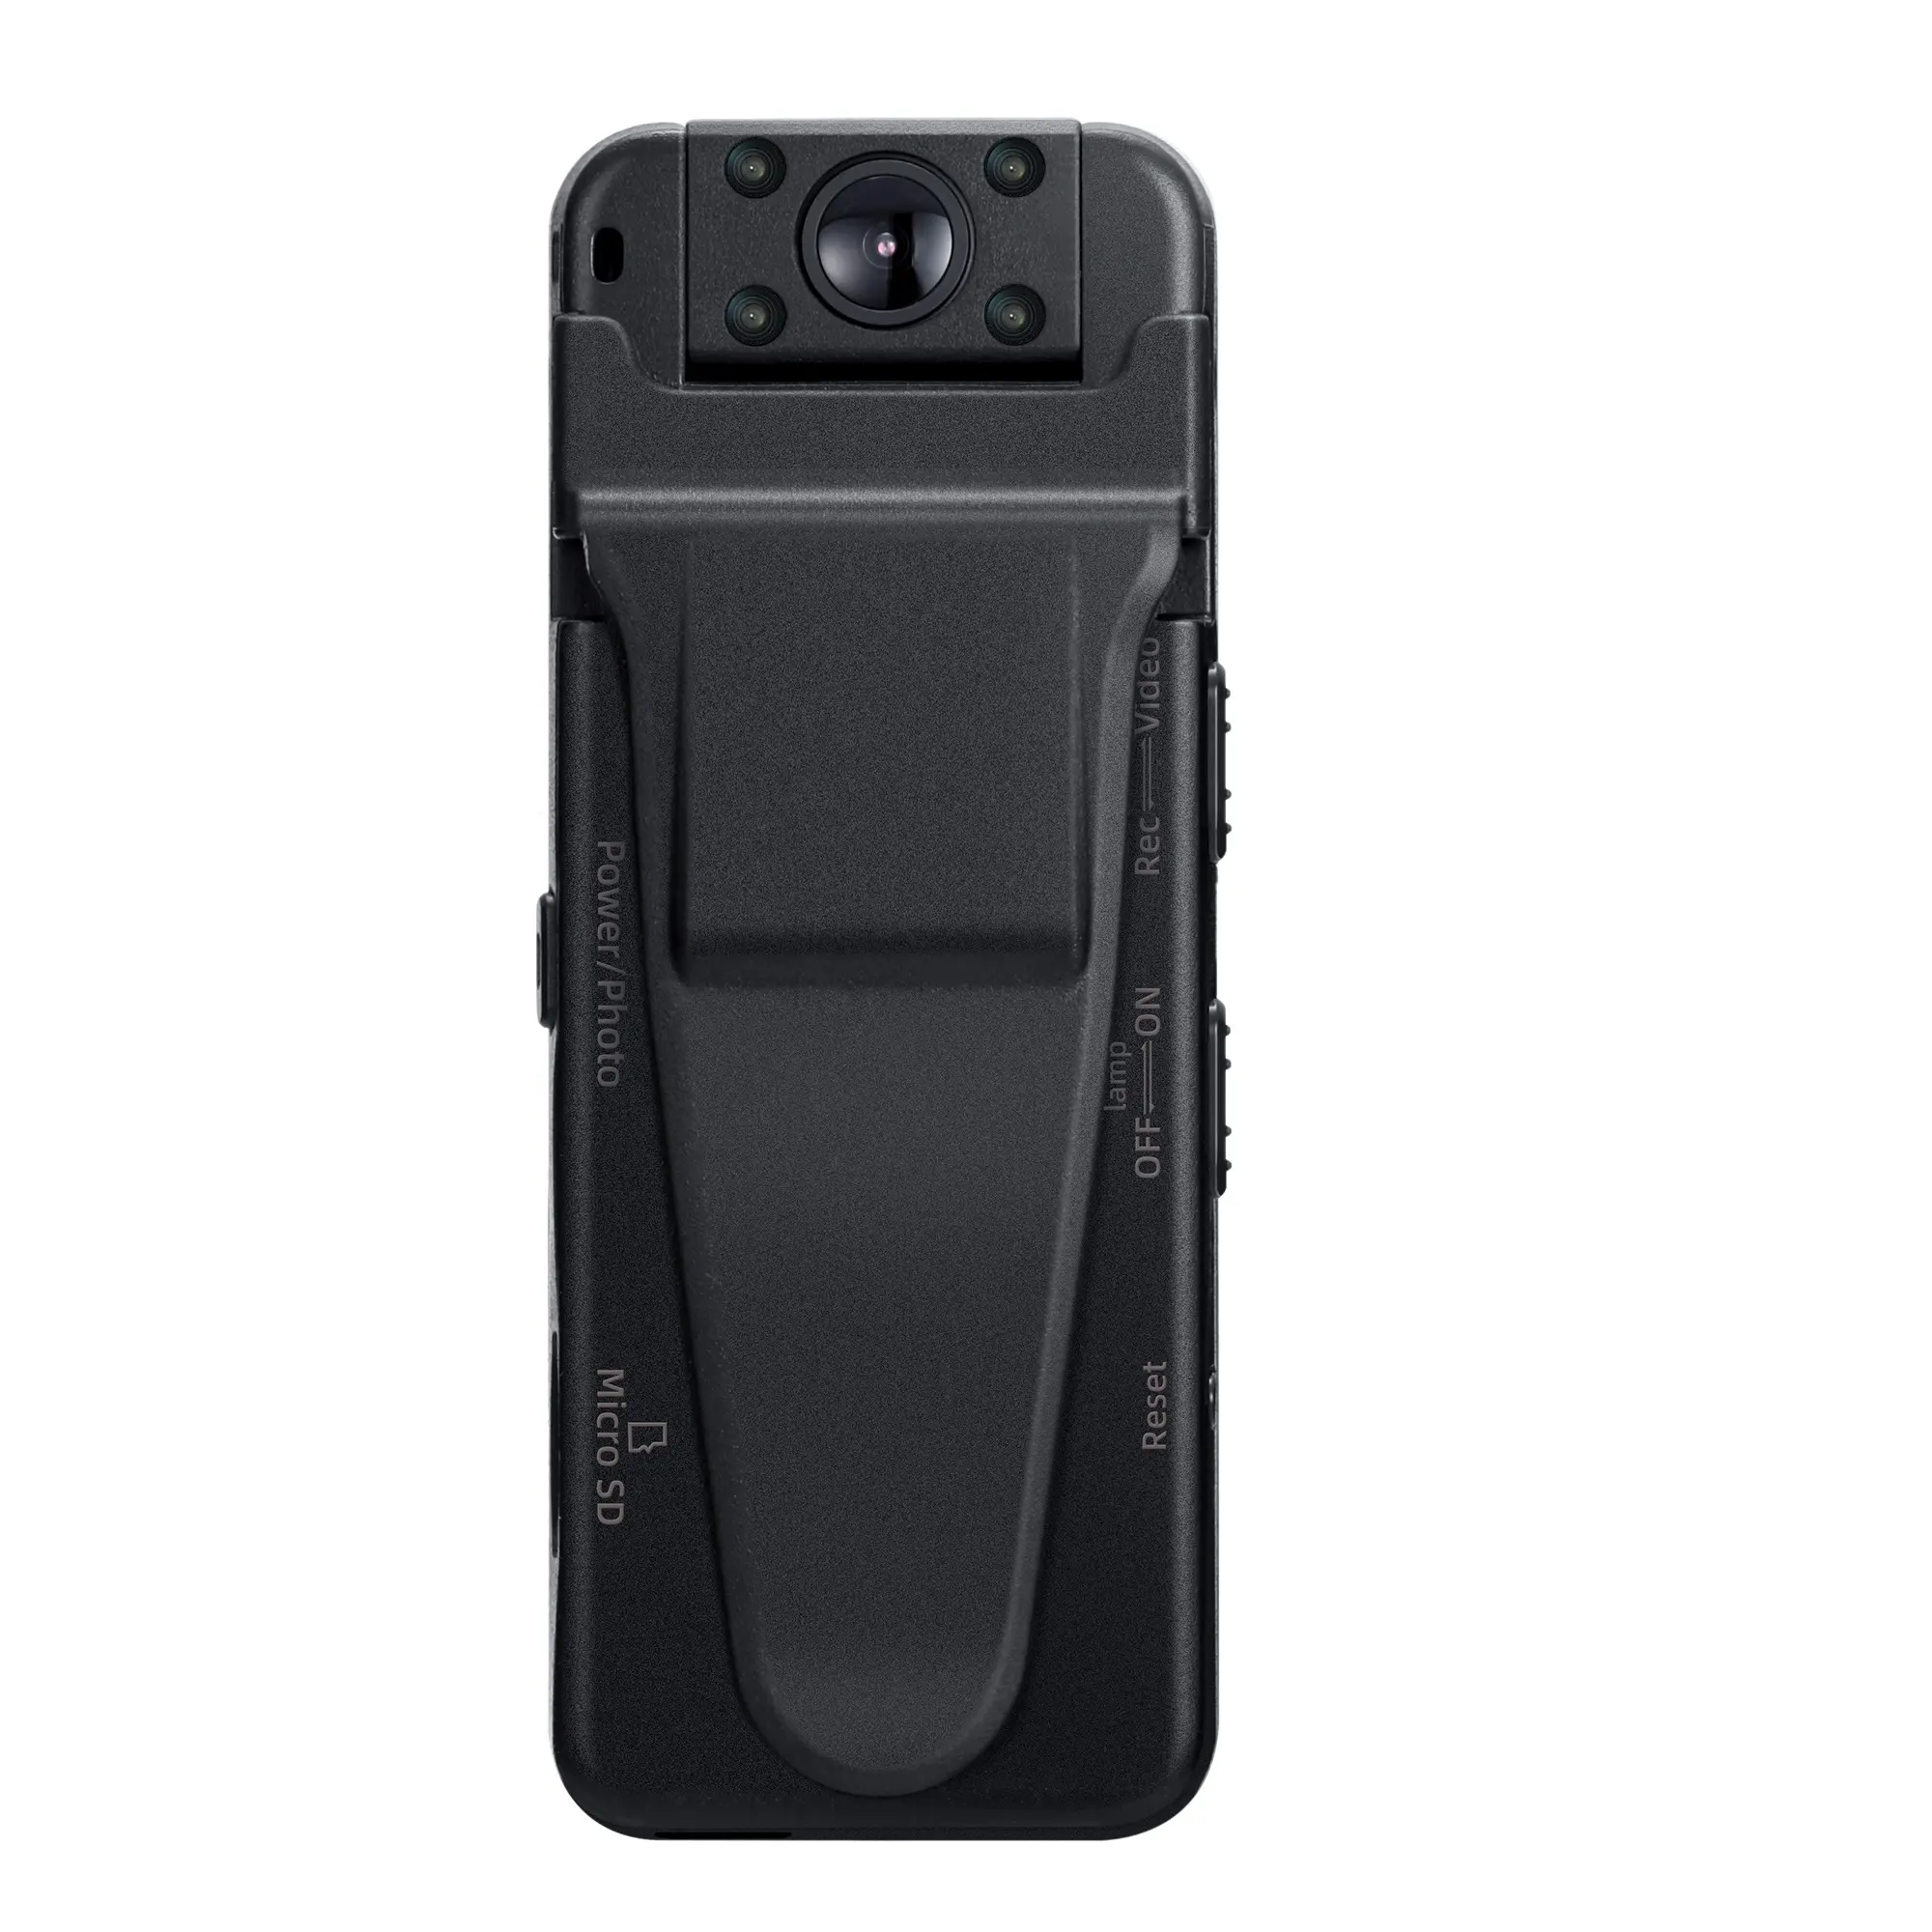 Vandlion A8z Digitaal Gemonteerde Camera Full Hd 1080P Video-Opname 1800Mah Lange Batterijduur Body Monted Cam Motorfiets